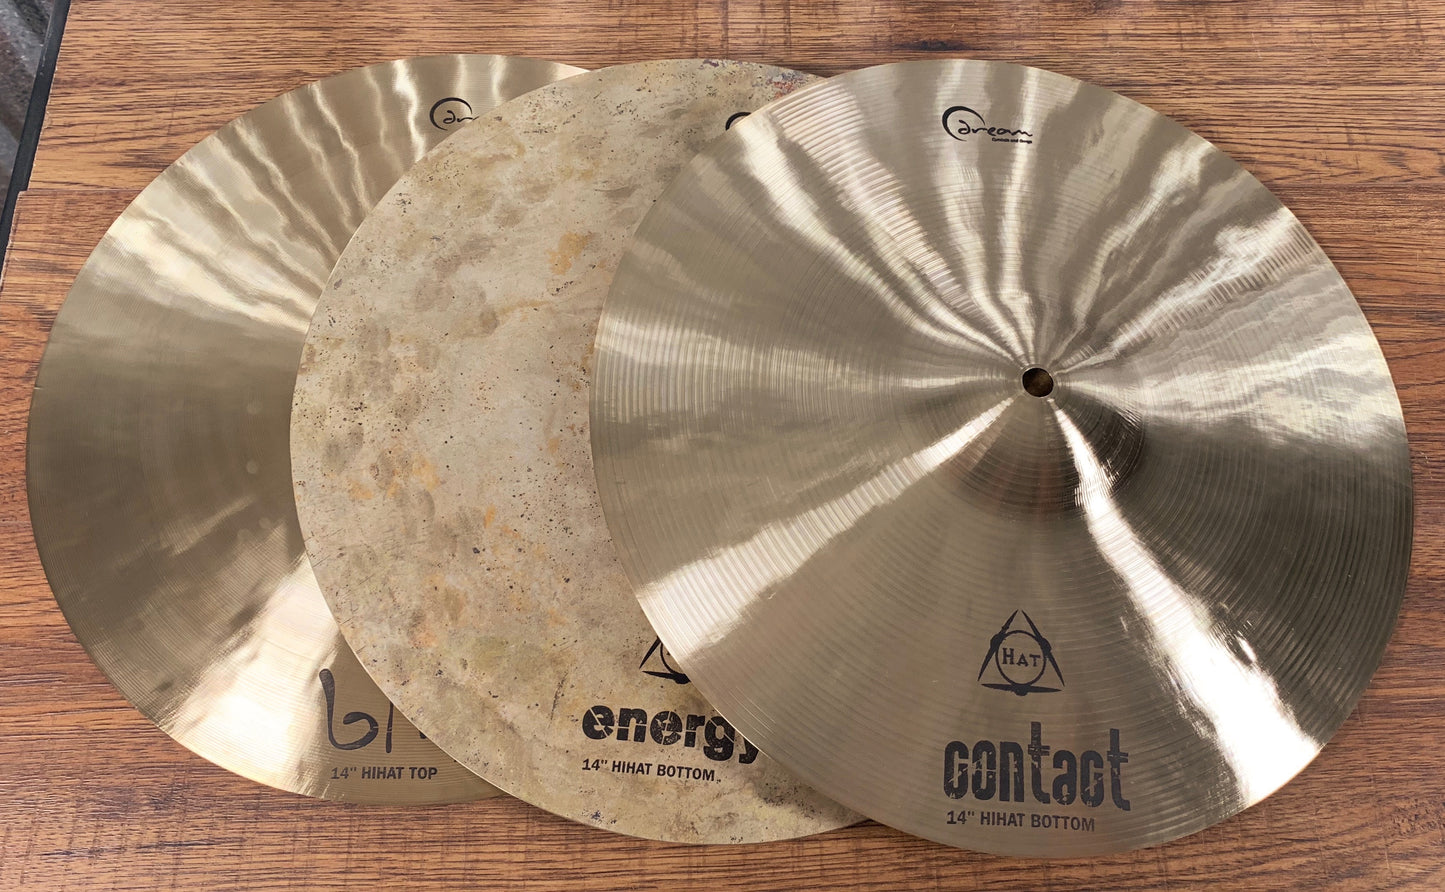 Dream Cymbals TRIHAT14D Tri-Hat Diversity Hand Forged & Hammered 14" Tri-Hat Set & Bag Demo